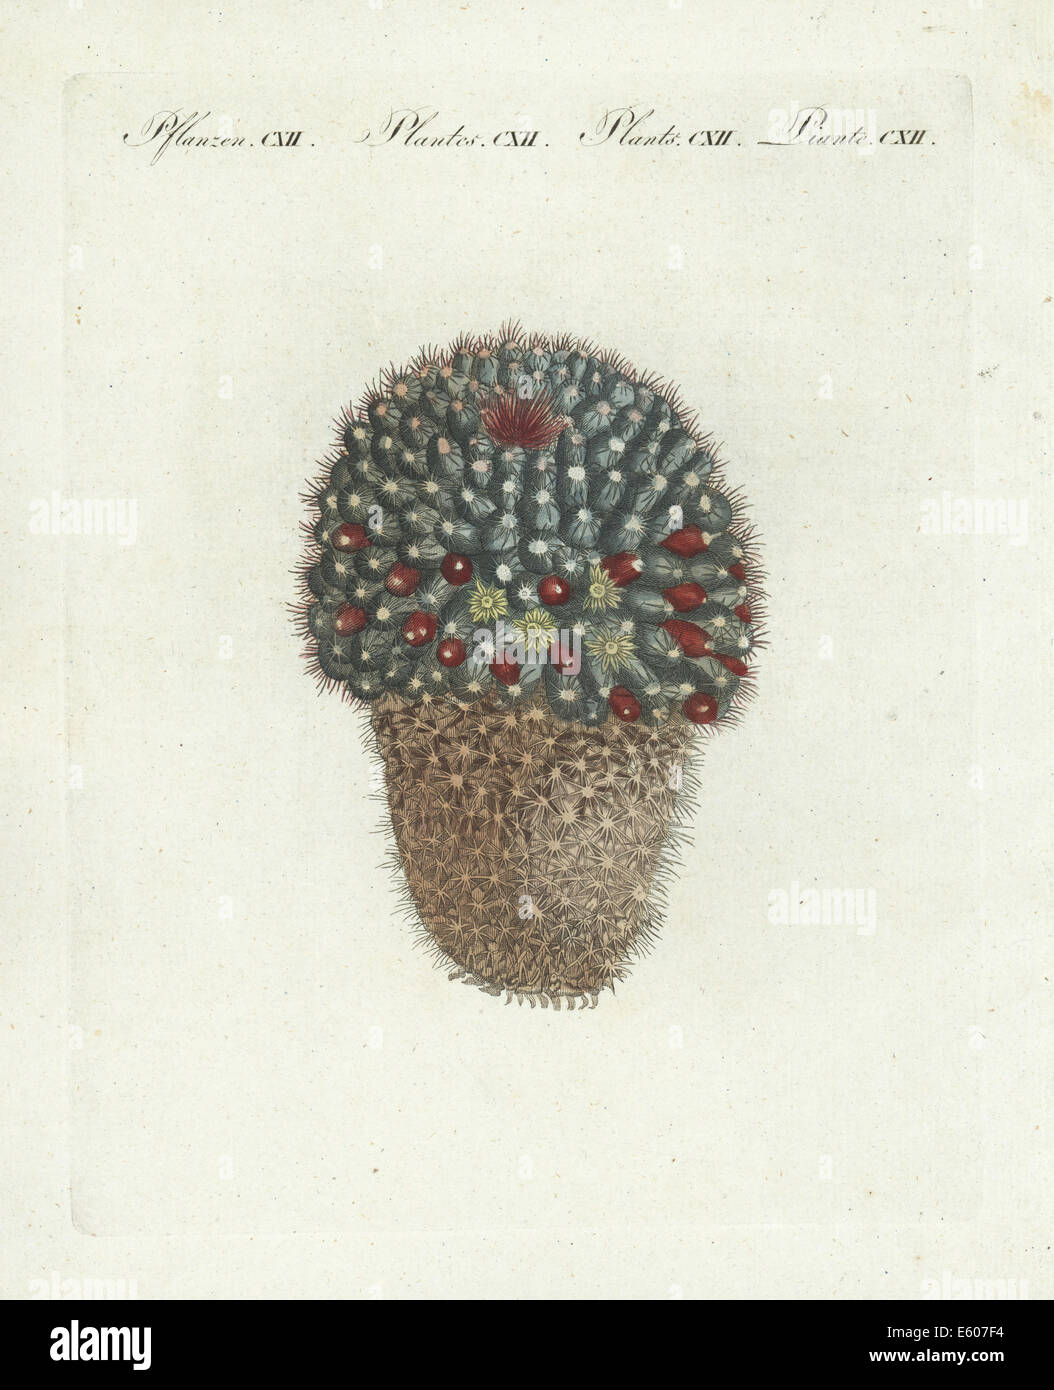 Woolly nipple cactus, Mammillaria mammillaris. Stock Photo